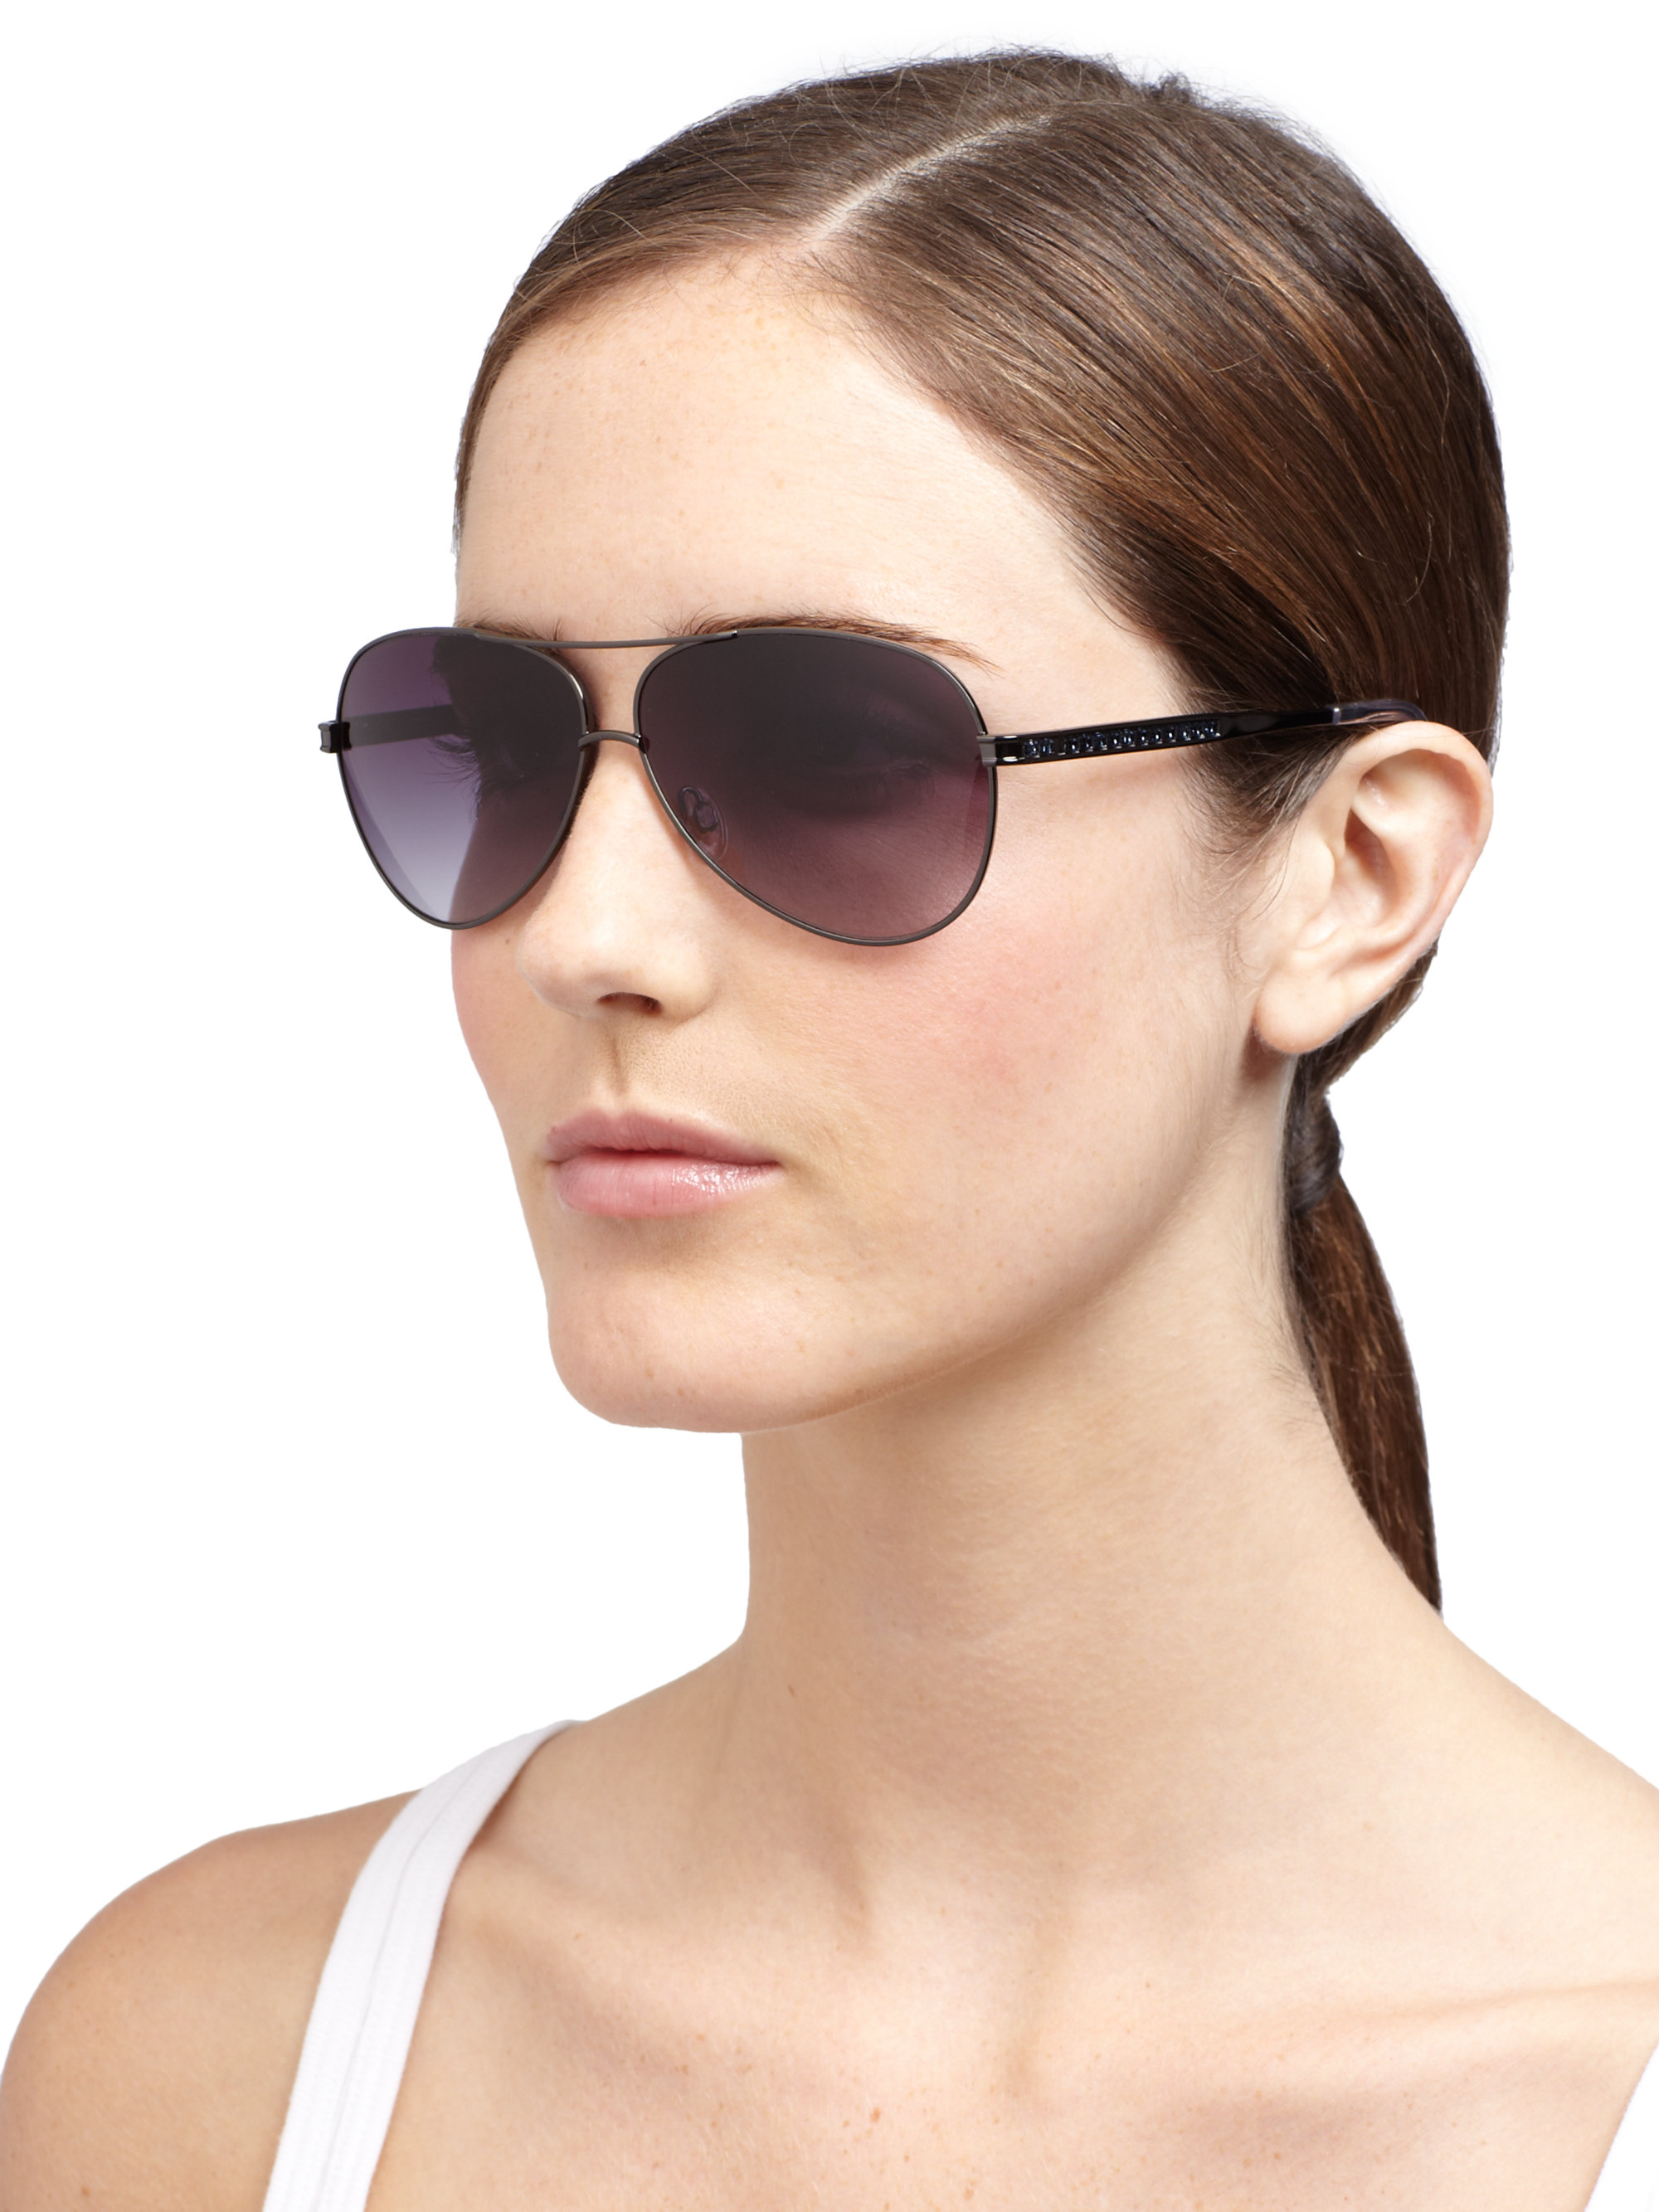 Lyst - Judith leiber Art Deco Metal Aviator Sunglasses in Purple